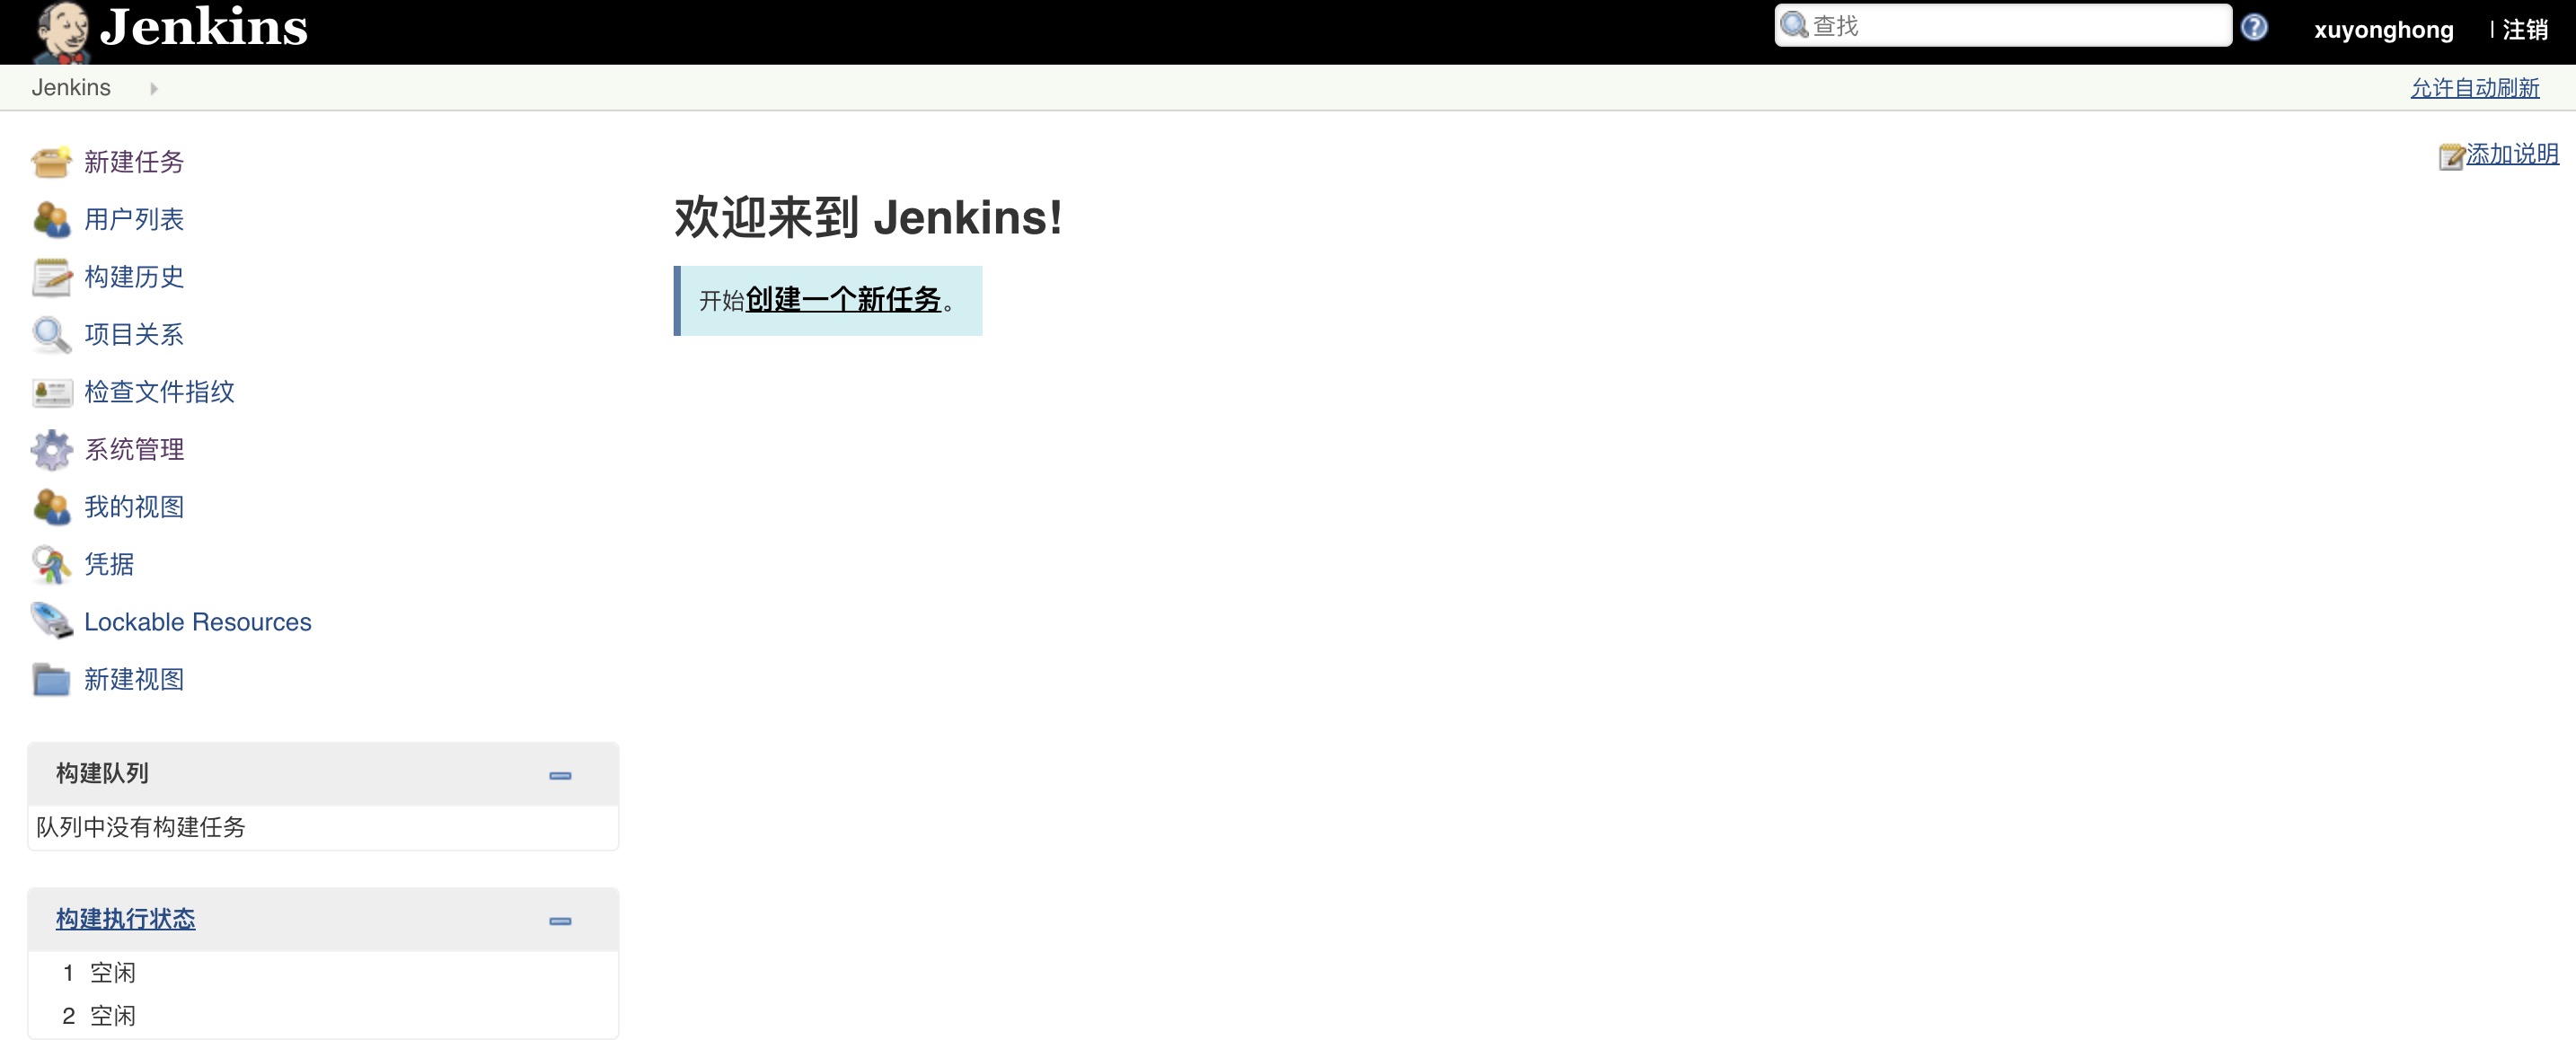 Jenkins_Home